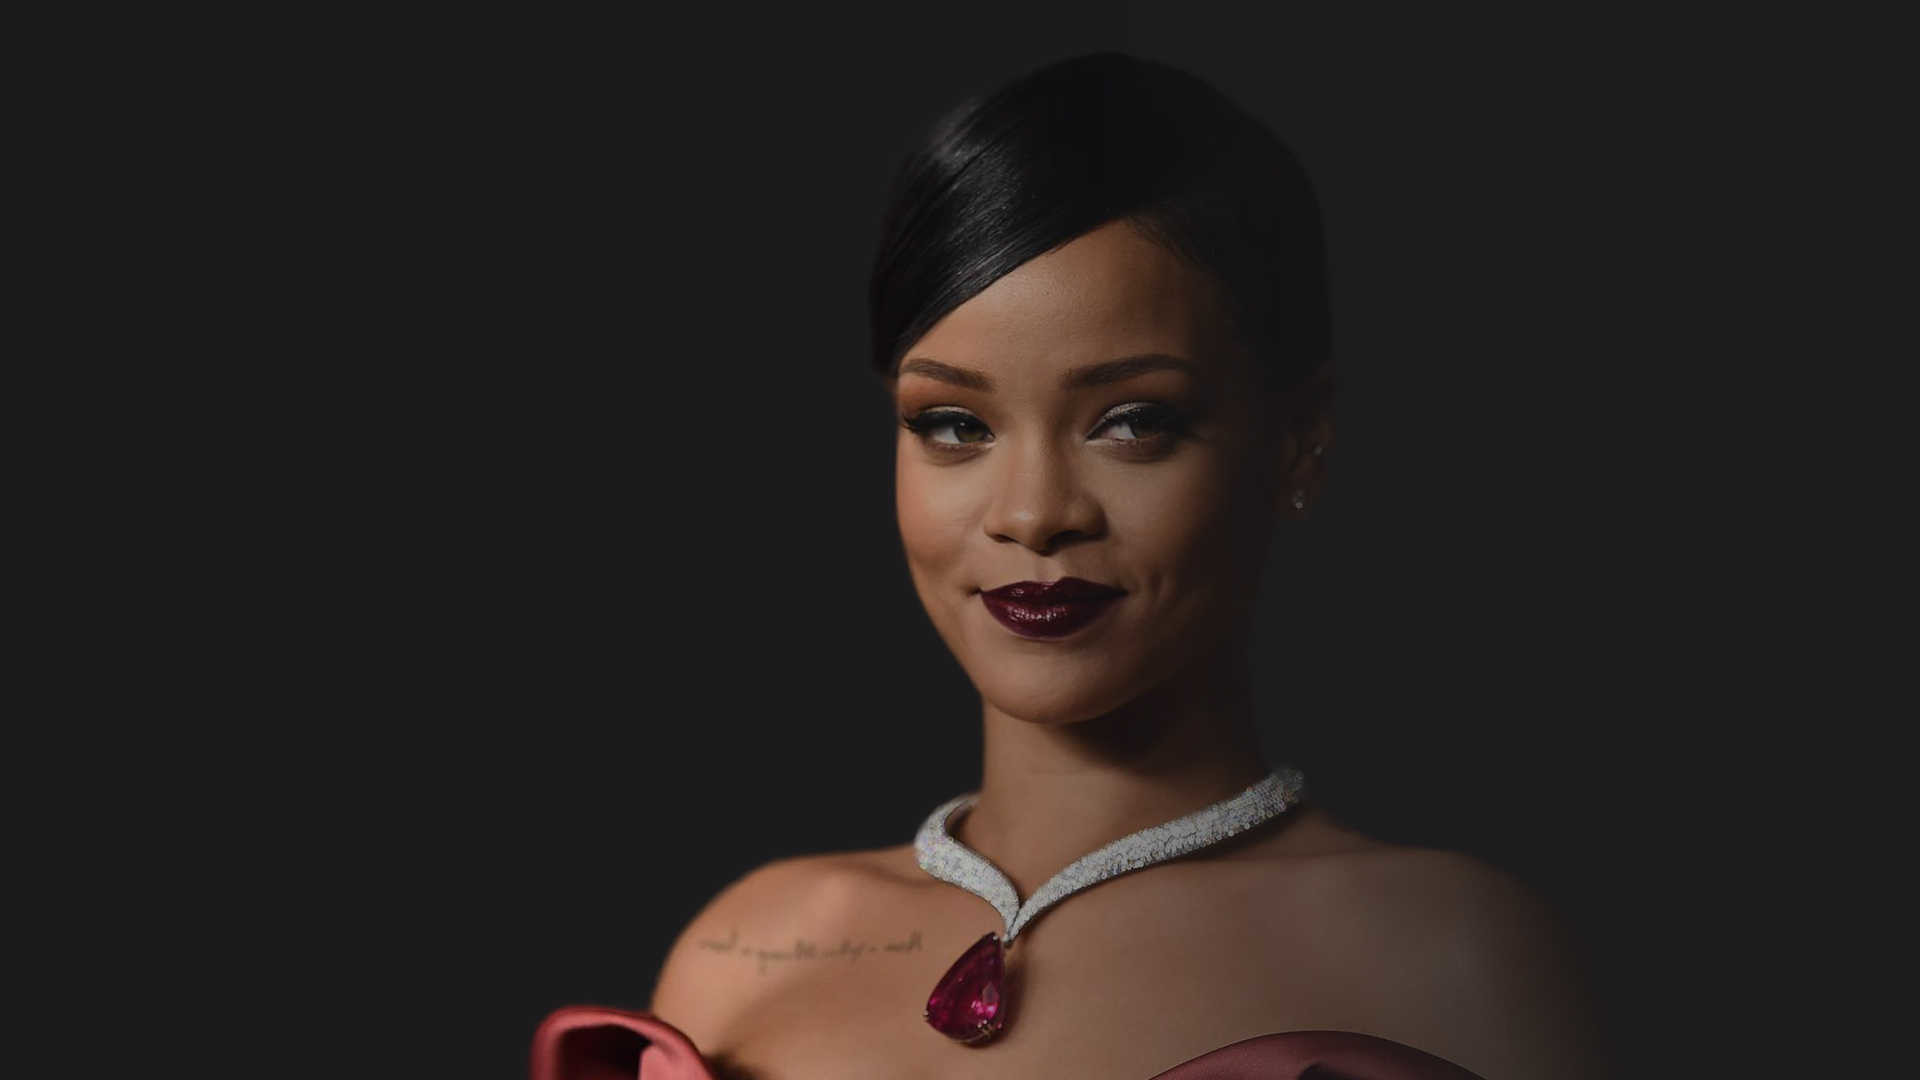 1920x1080 Wallpaper Rihanna 2015 HD Wallpapers 1080p Upload at February 26 